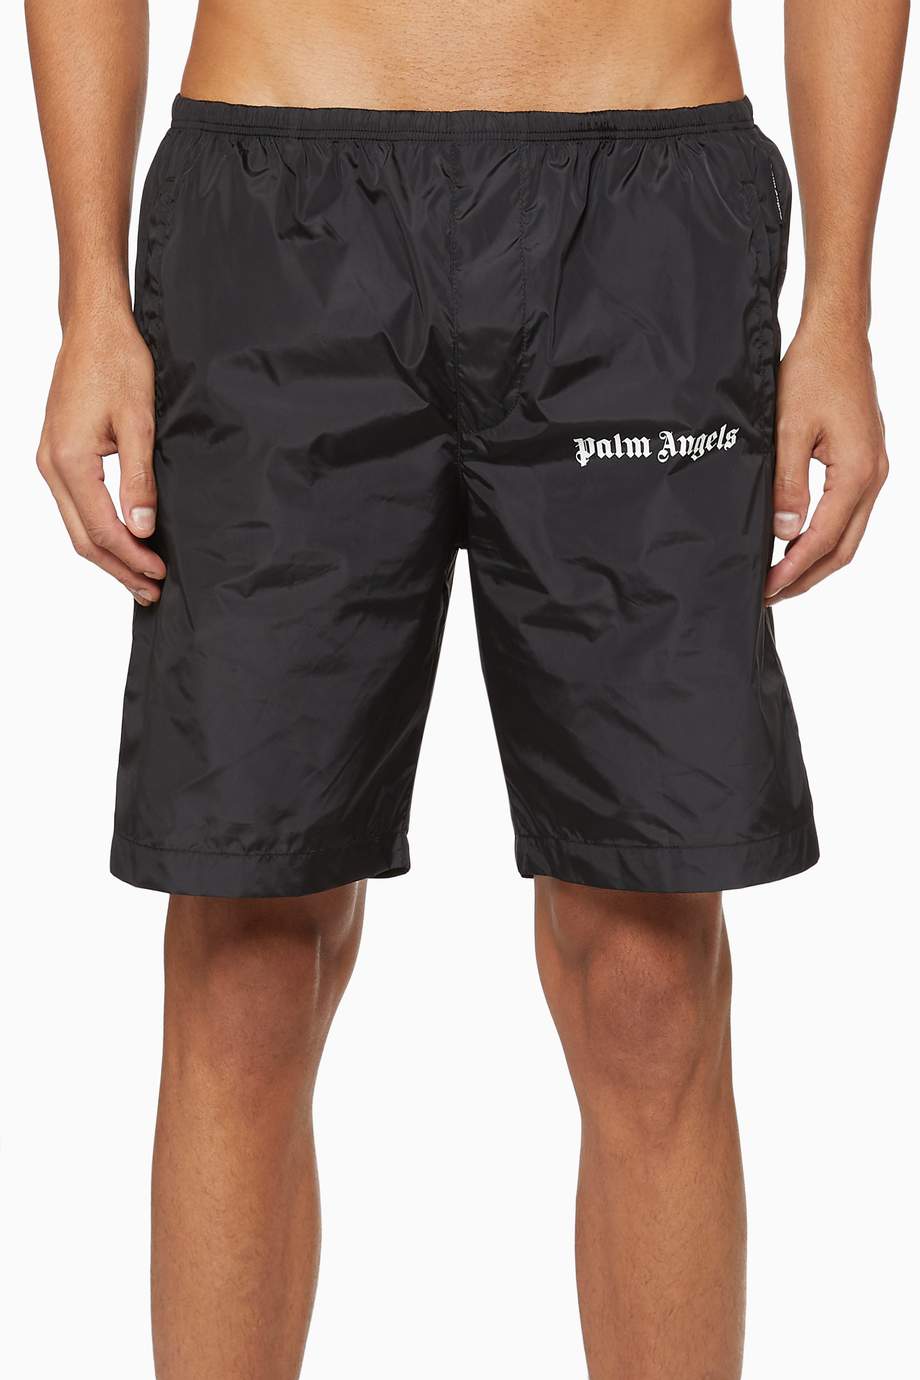 Shop Palm Angels Black Logo Swim Shorts for Men | Ounass UAE